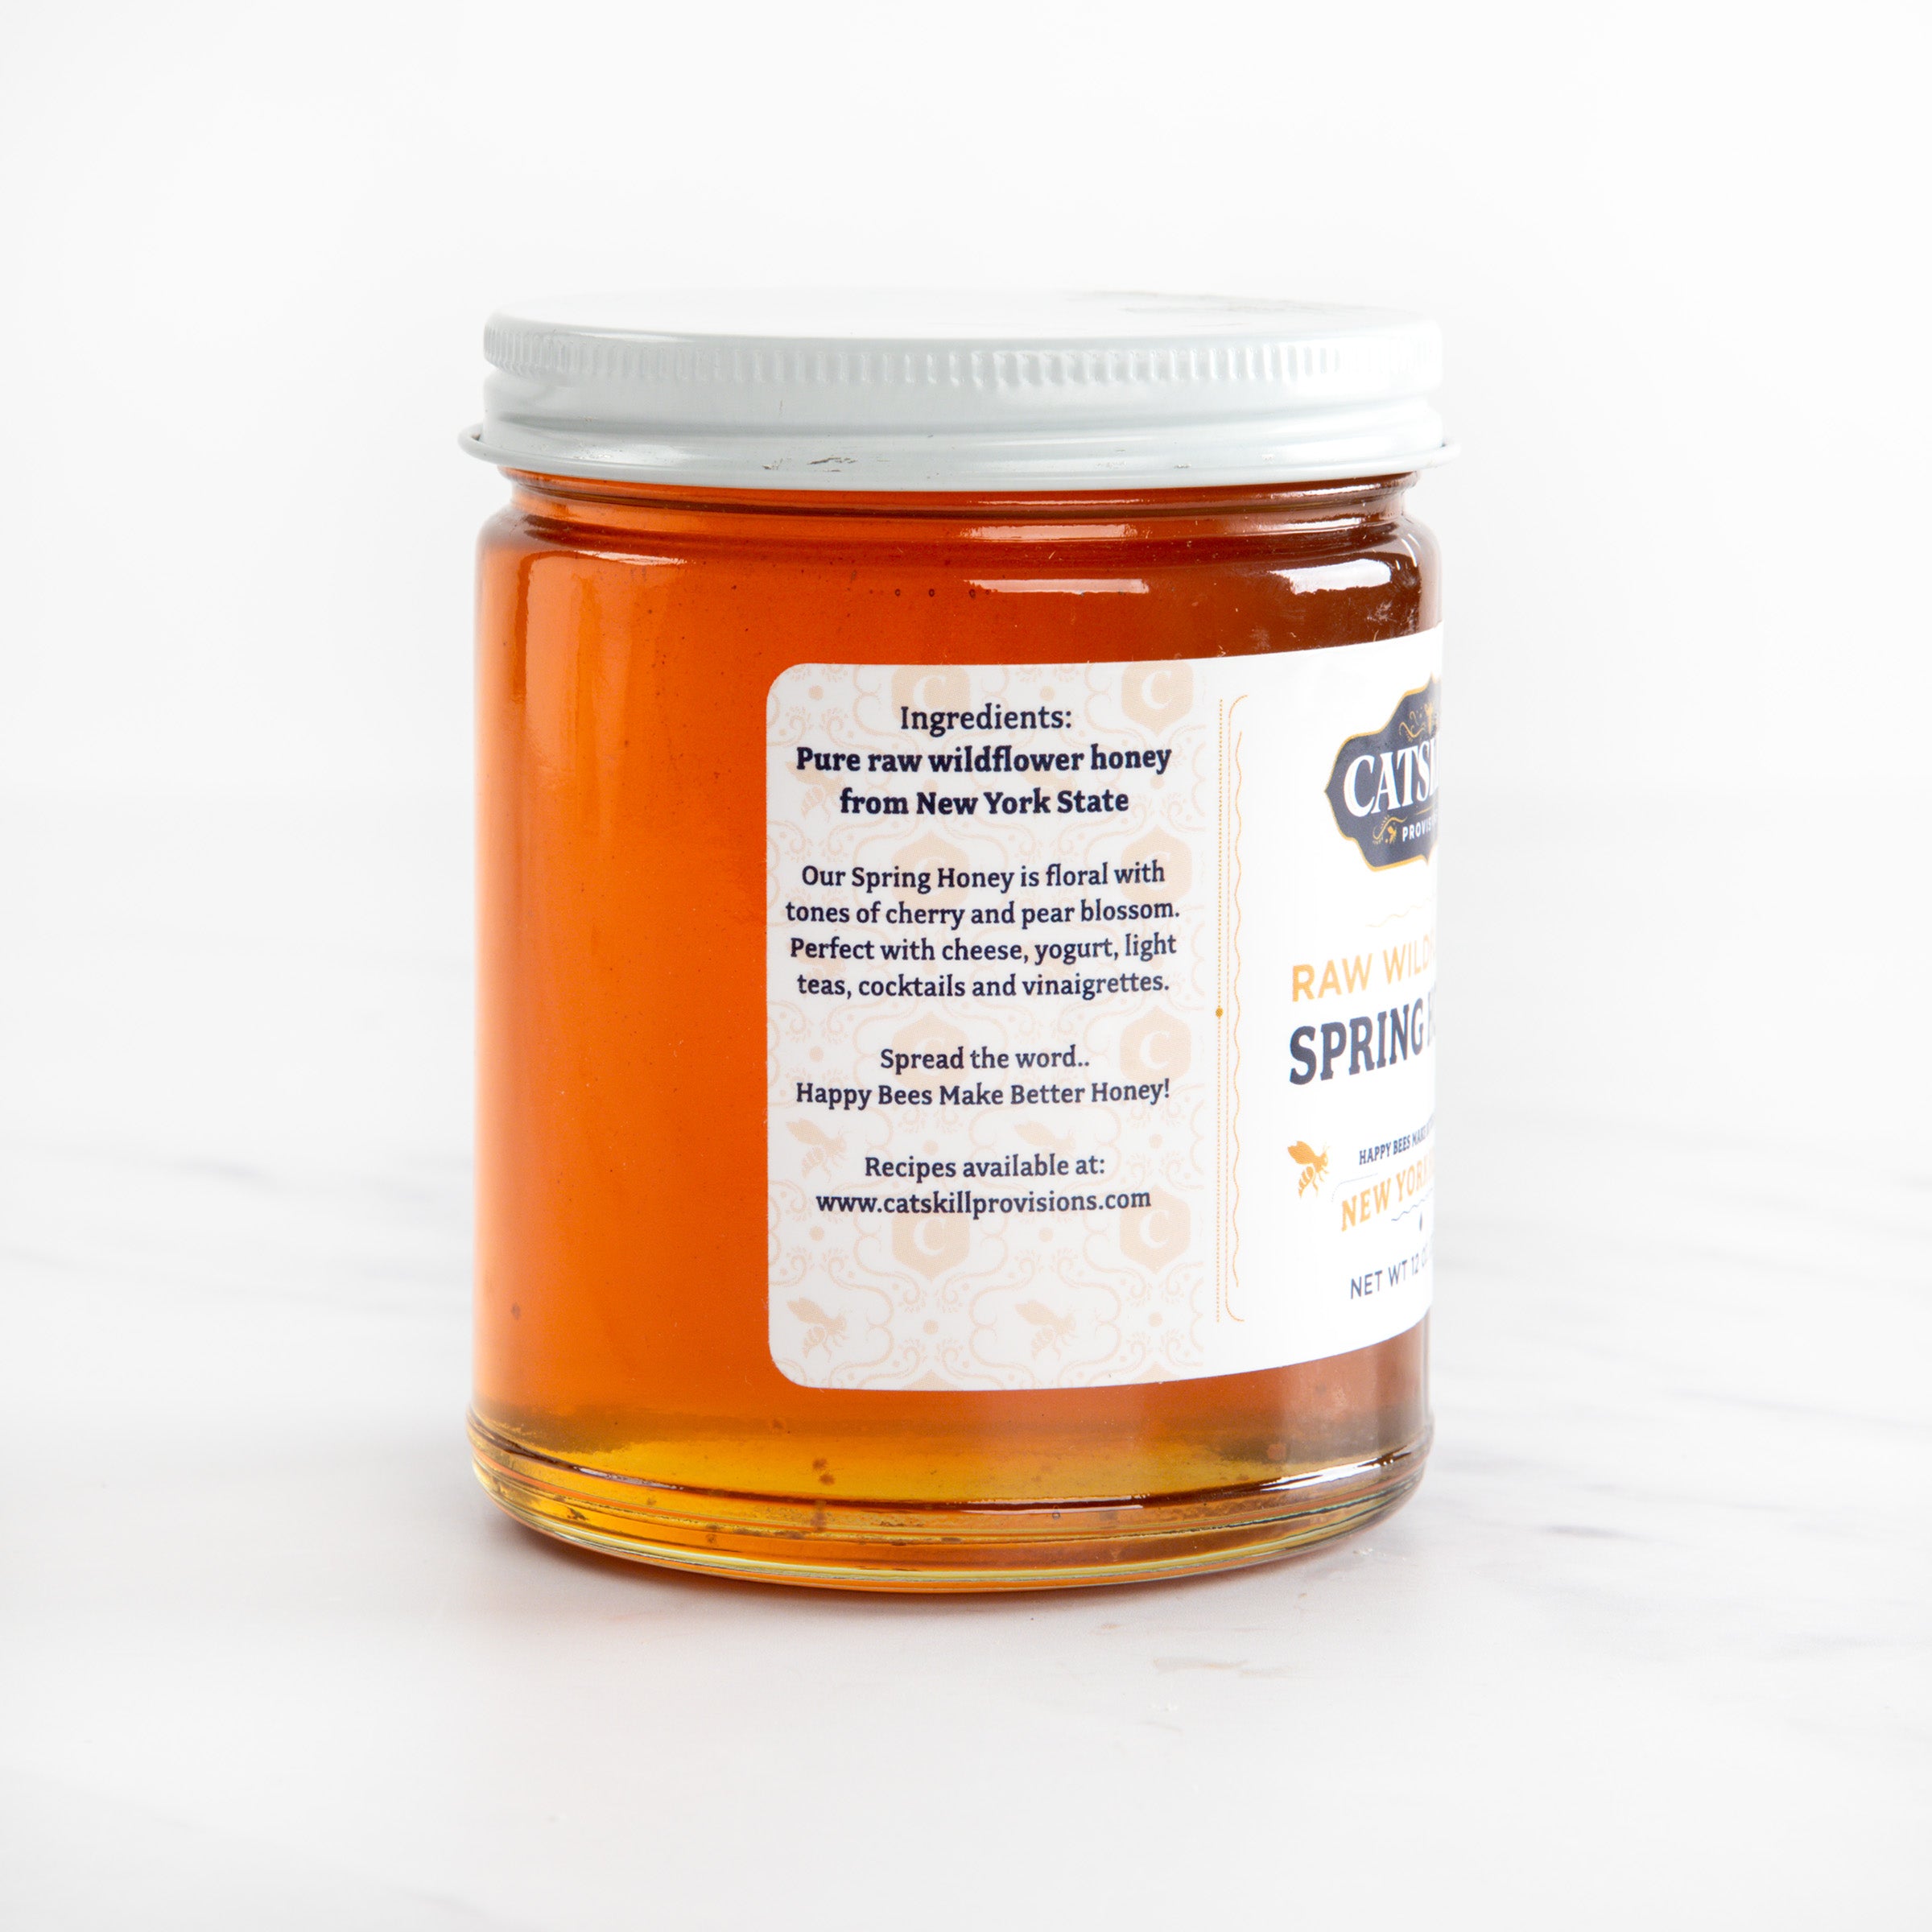 igourmet_10622_Spring Raw Wildflower Honey_Catskill Provisions_Syrups, Maple and Honey